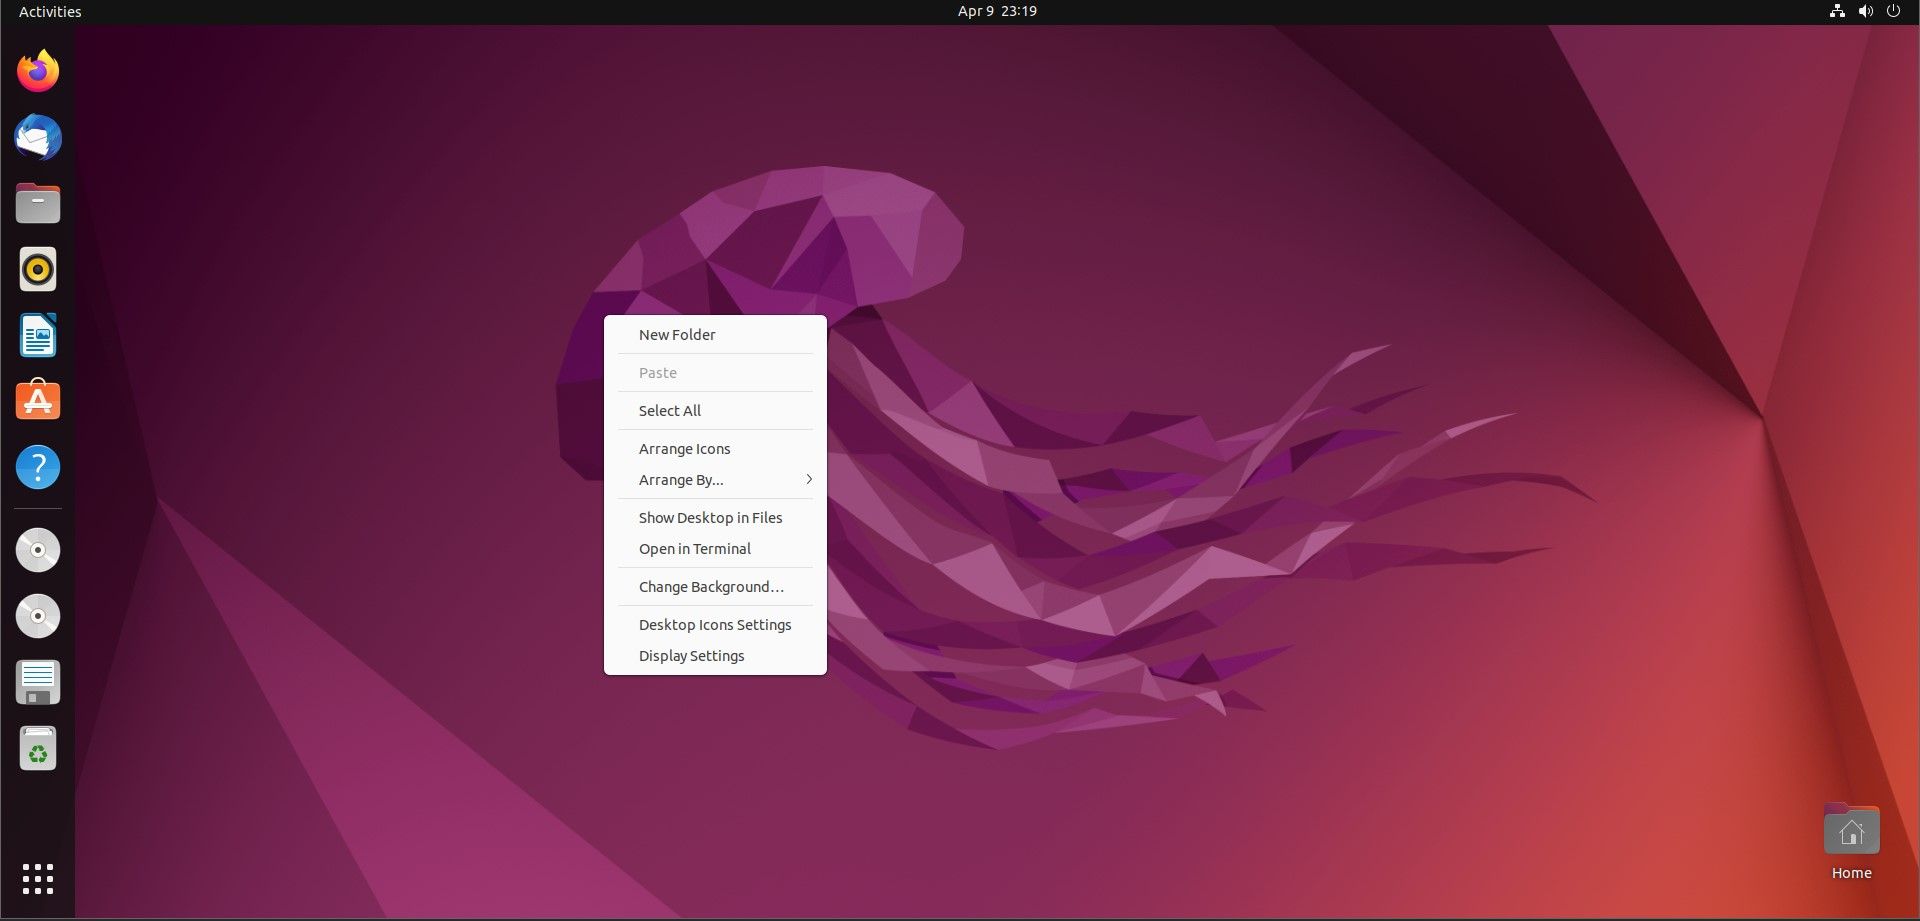 Interfaccia desktop di Ubuntu con una finestra di dialogo aperta